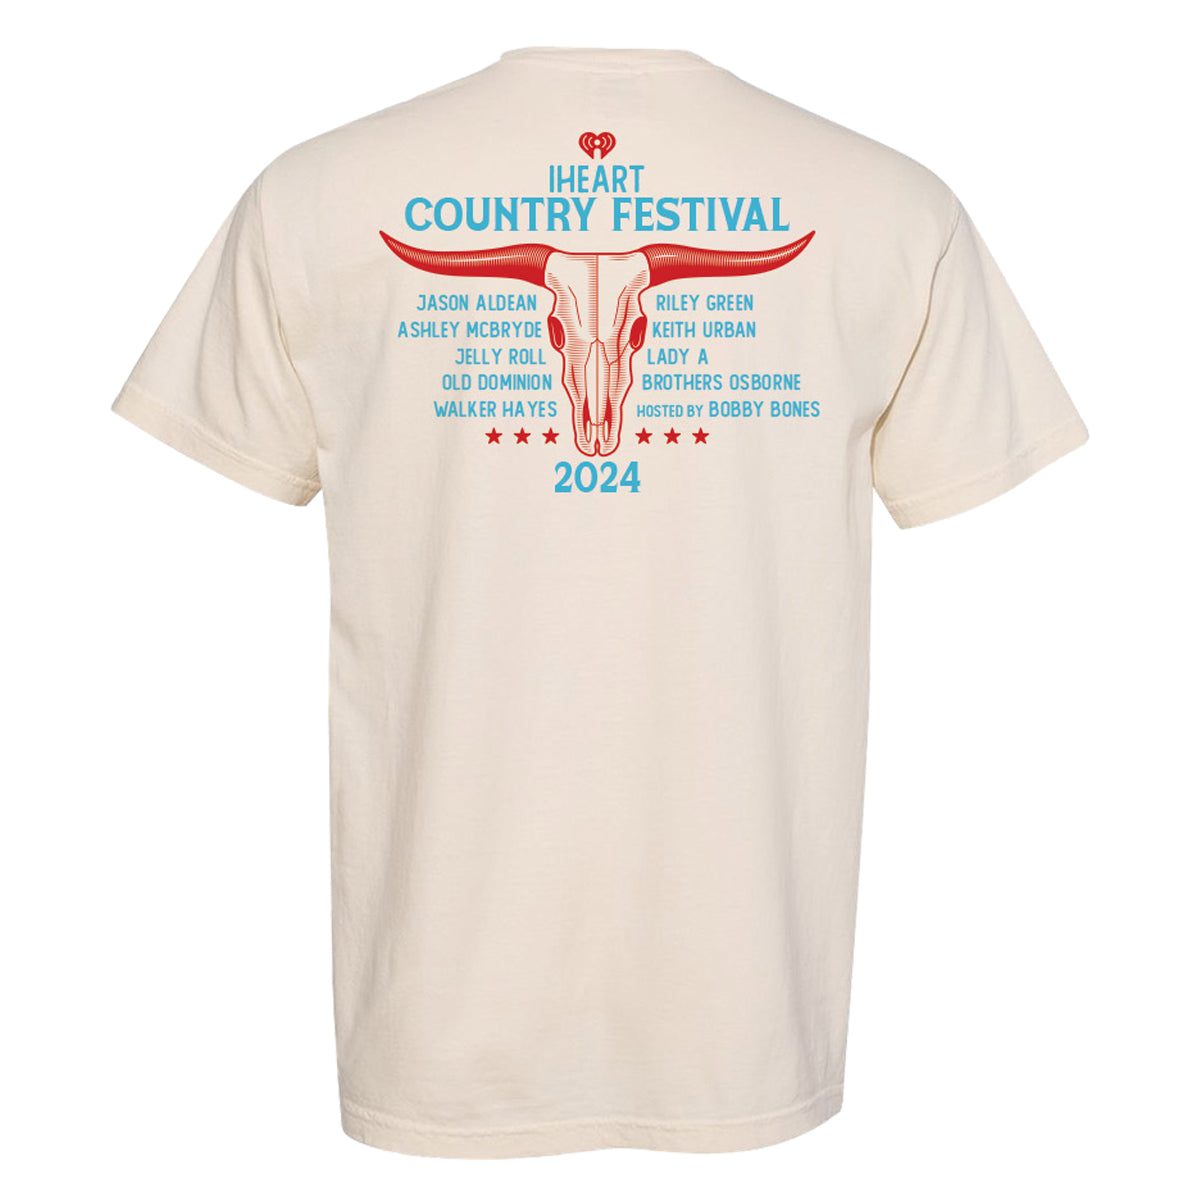 iHeartCountry Festival 2024 Cow Skull T-Shirt